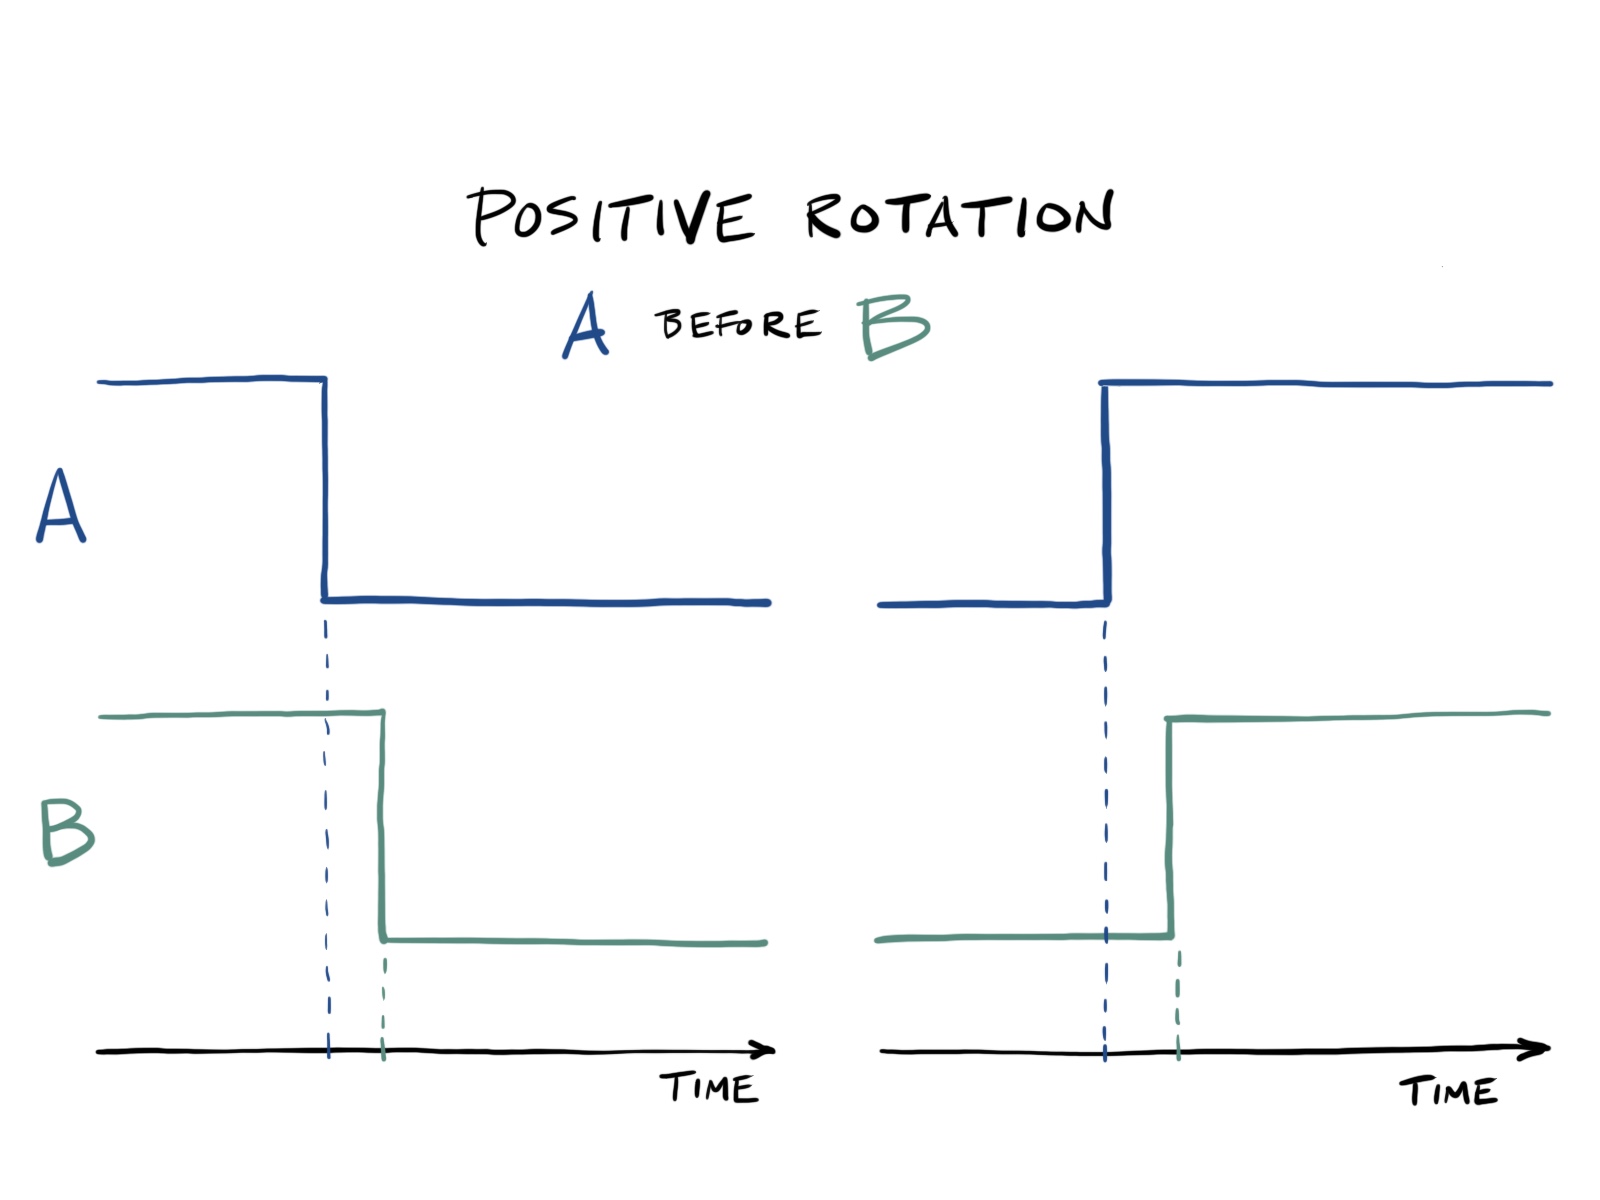 Positive Rotation